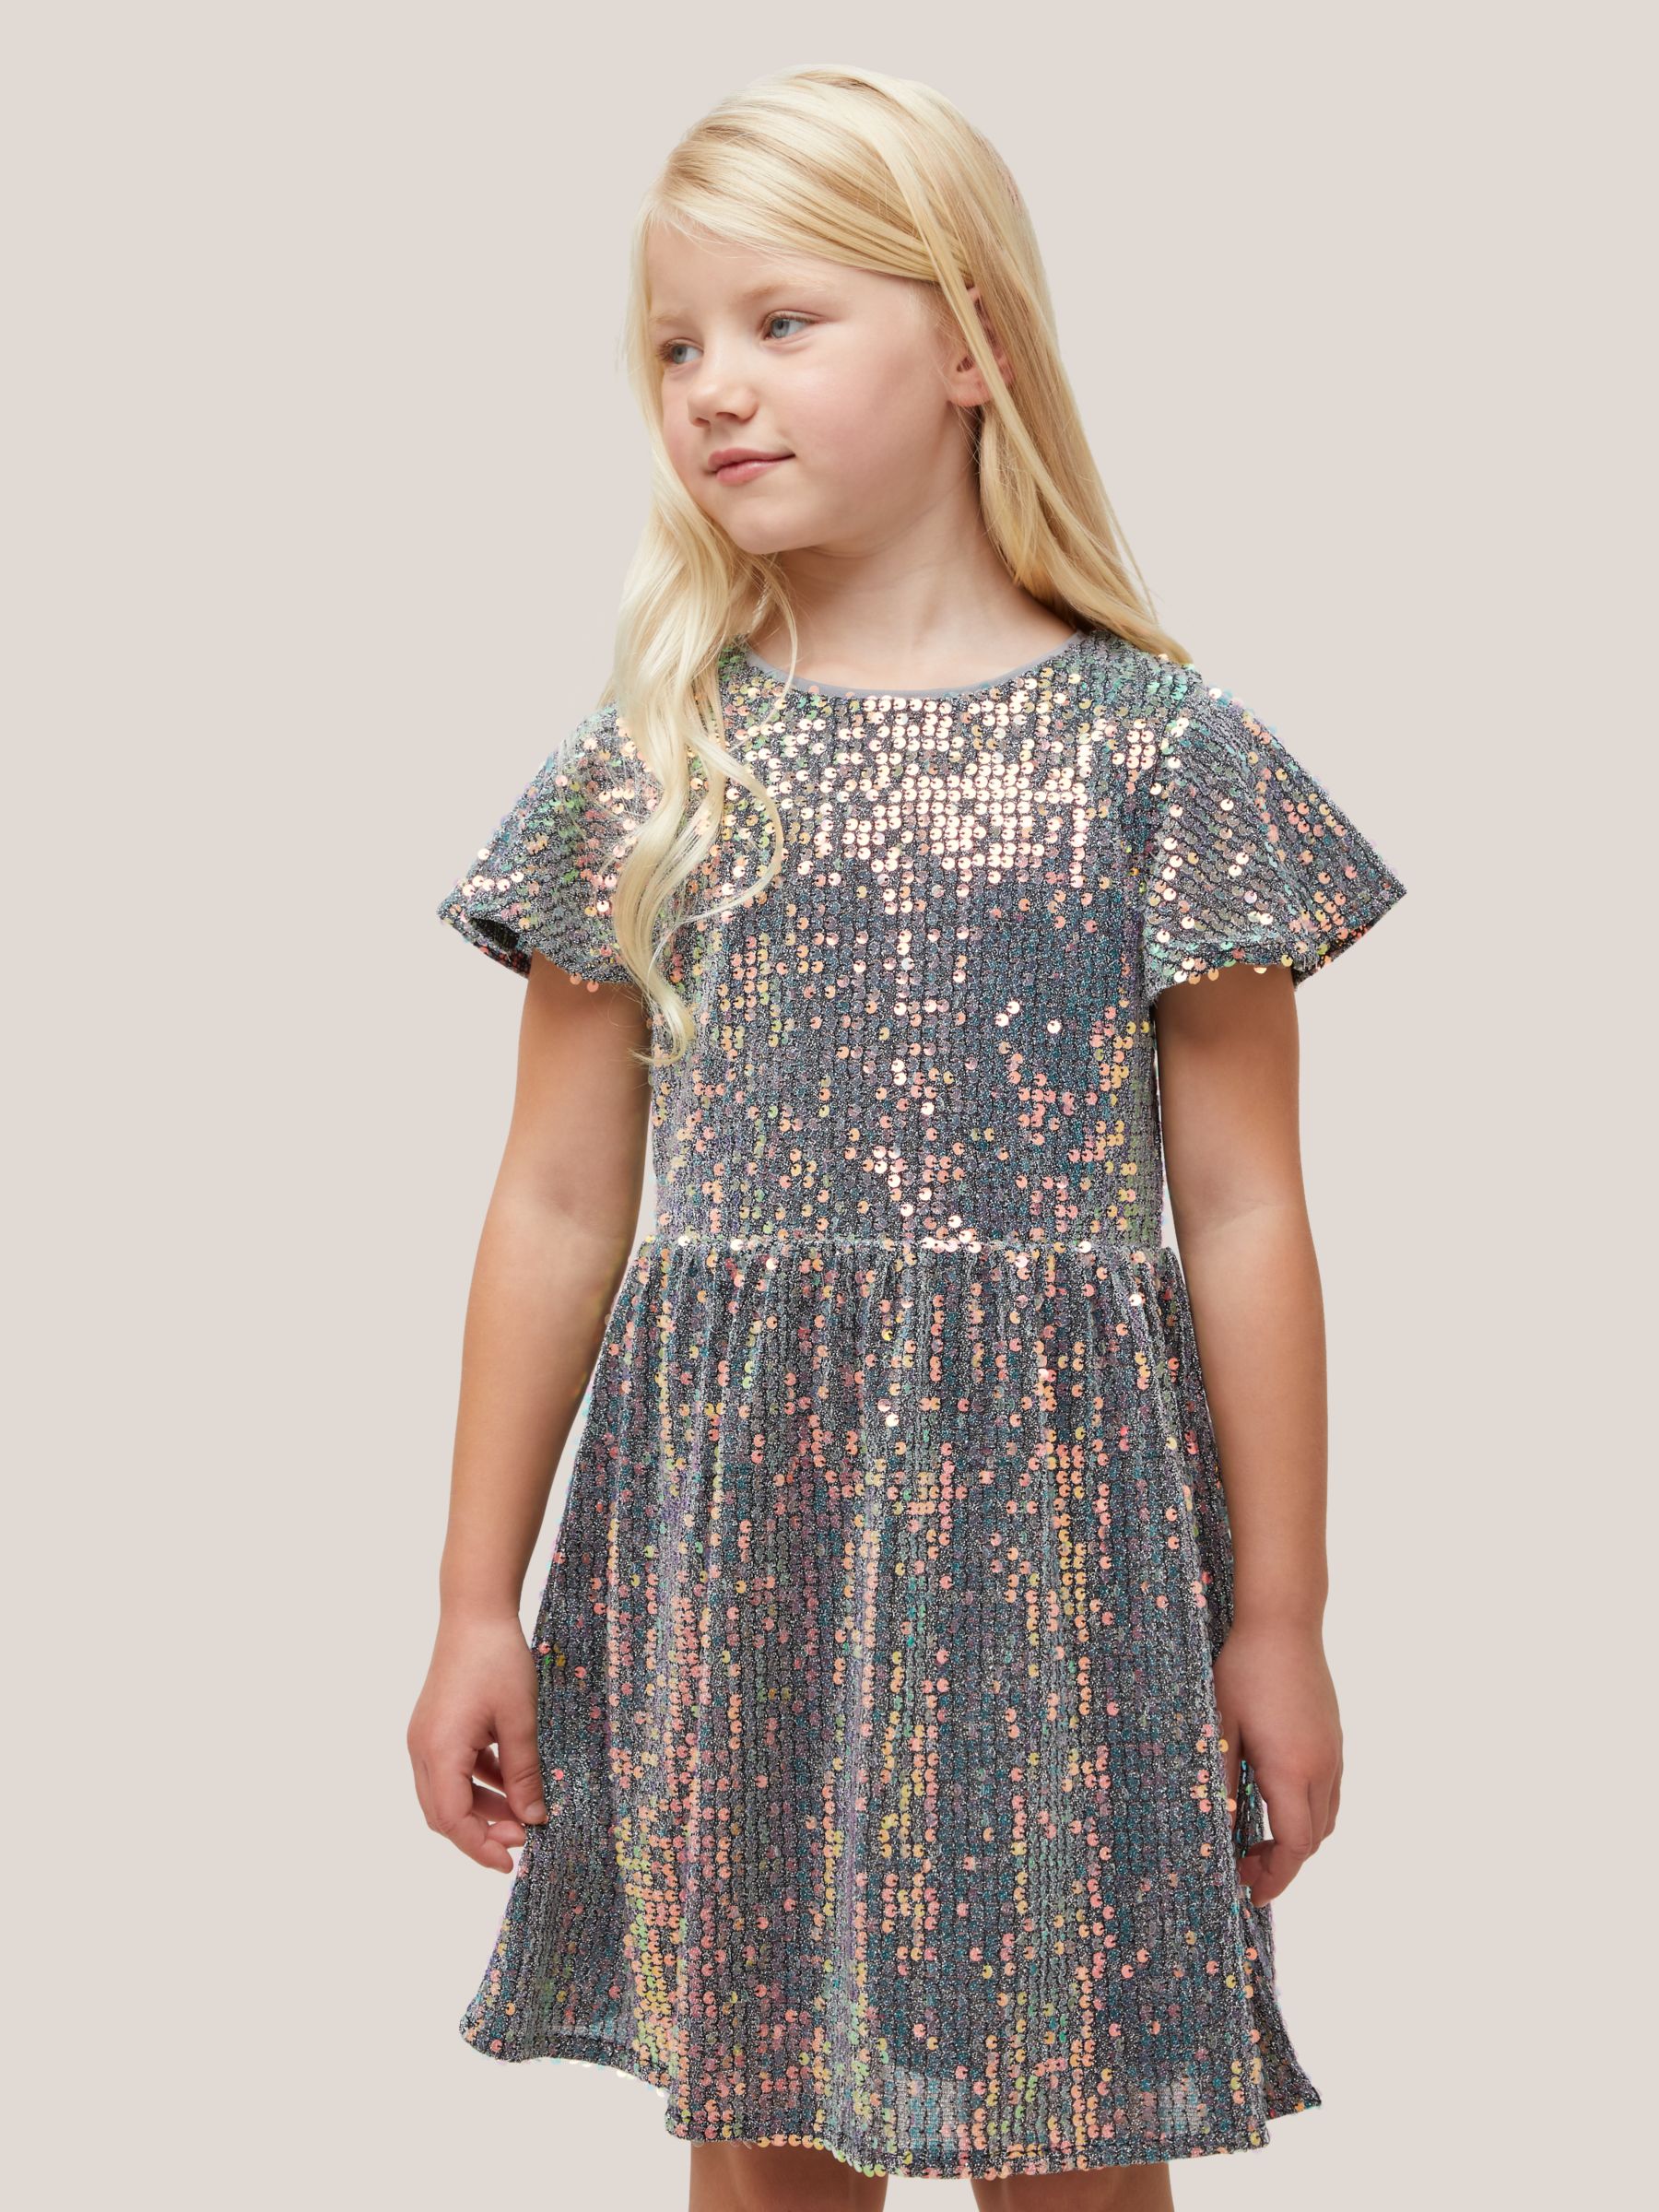 John Lewis Kids' Lurex Sequin Dress, Silver